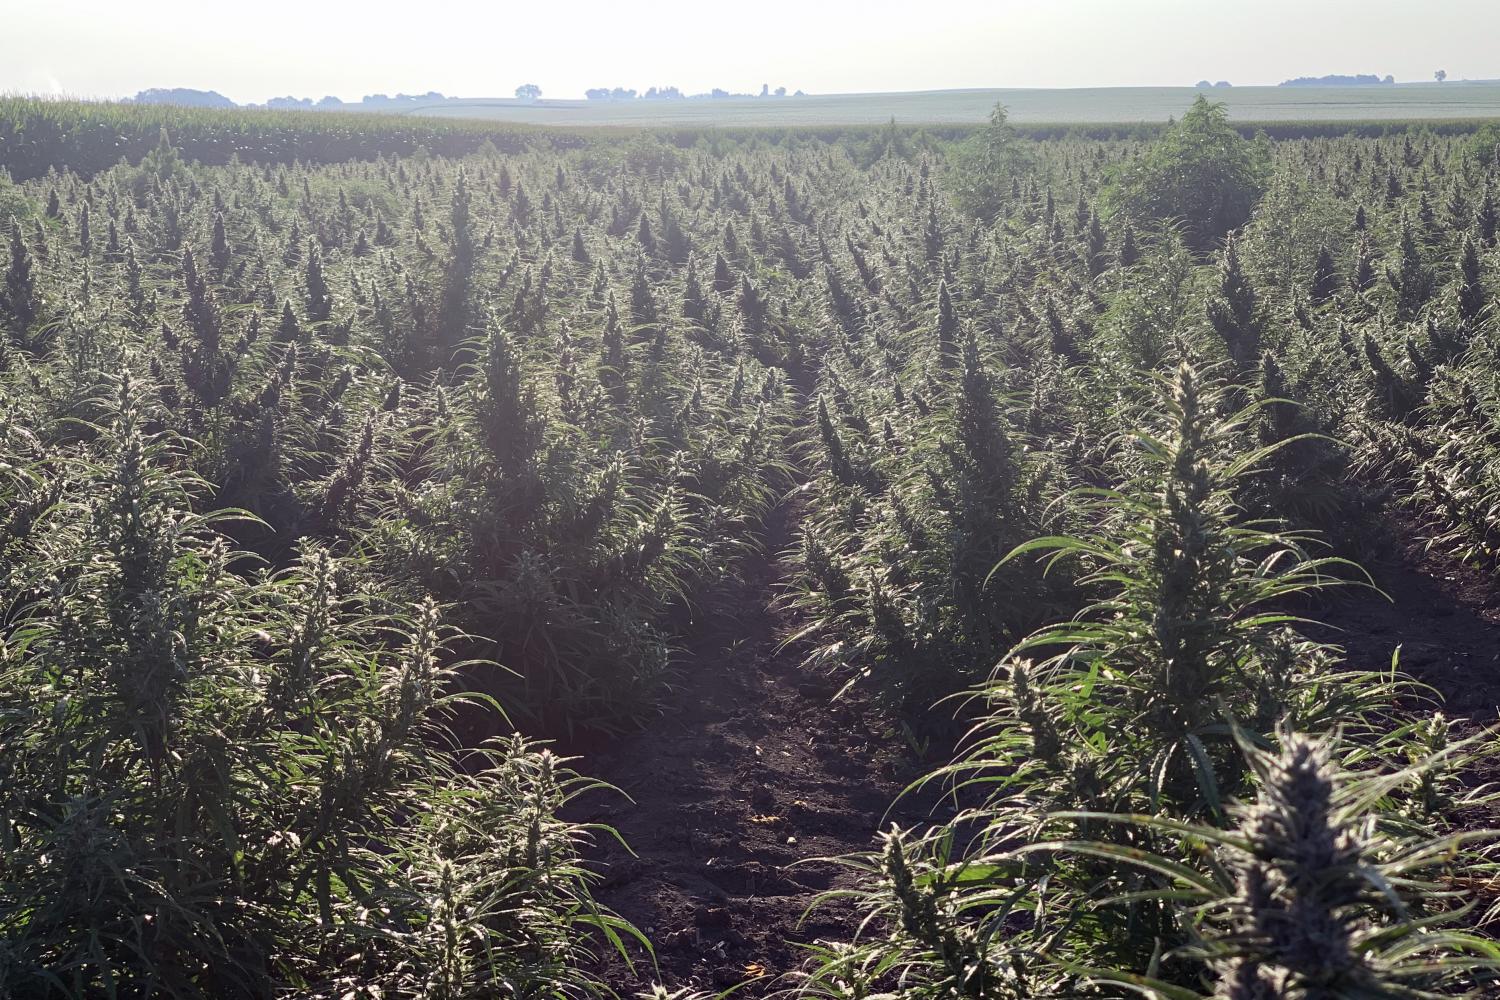 hemp plants in Illinois field